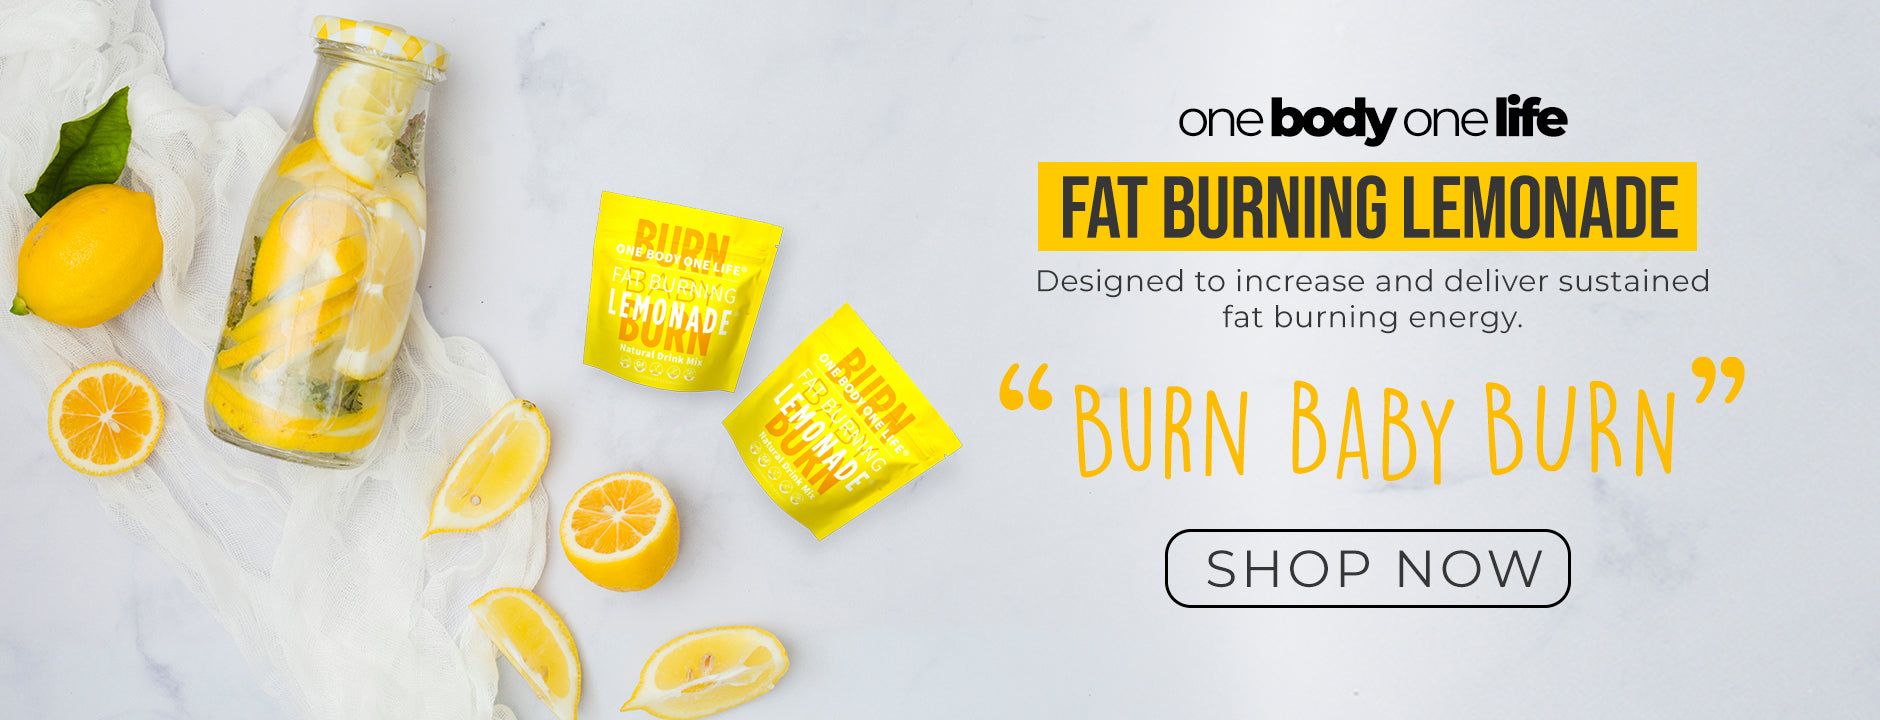 One Body One Life Fat Burning Lemonade – fatburninglemonade